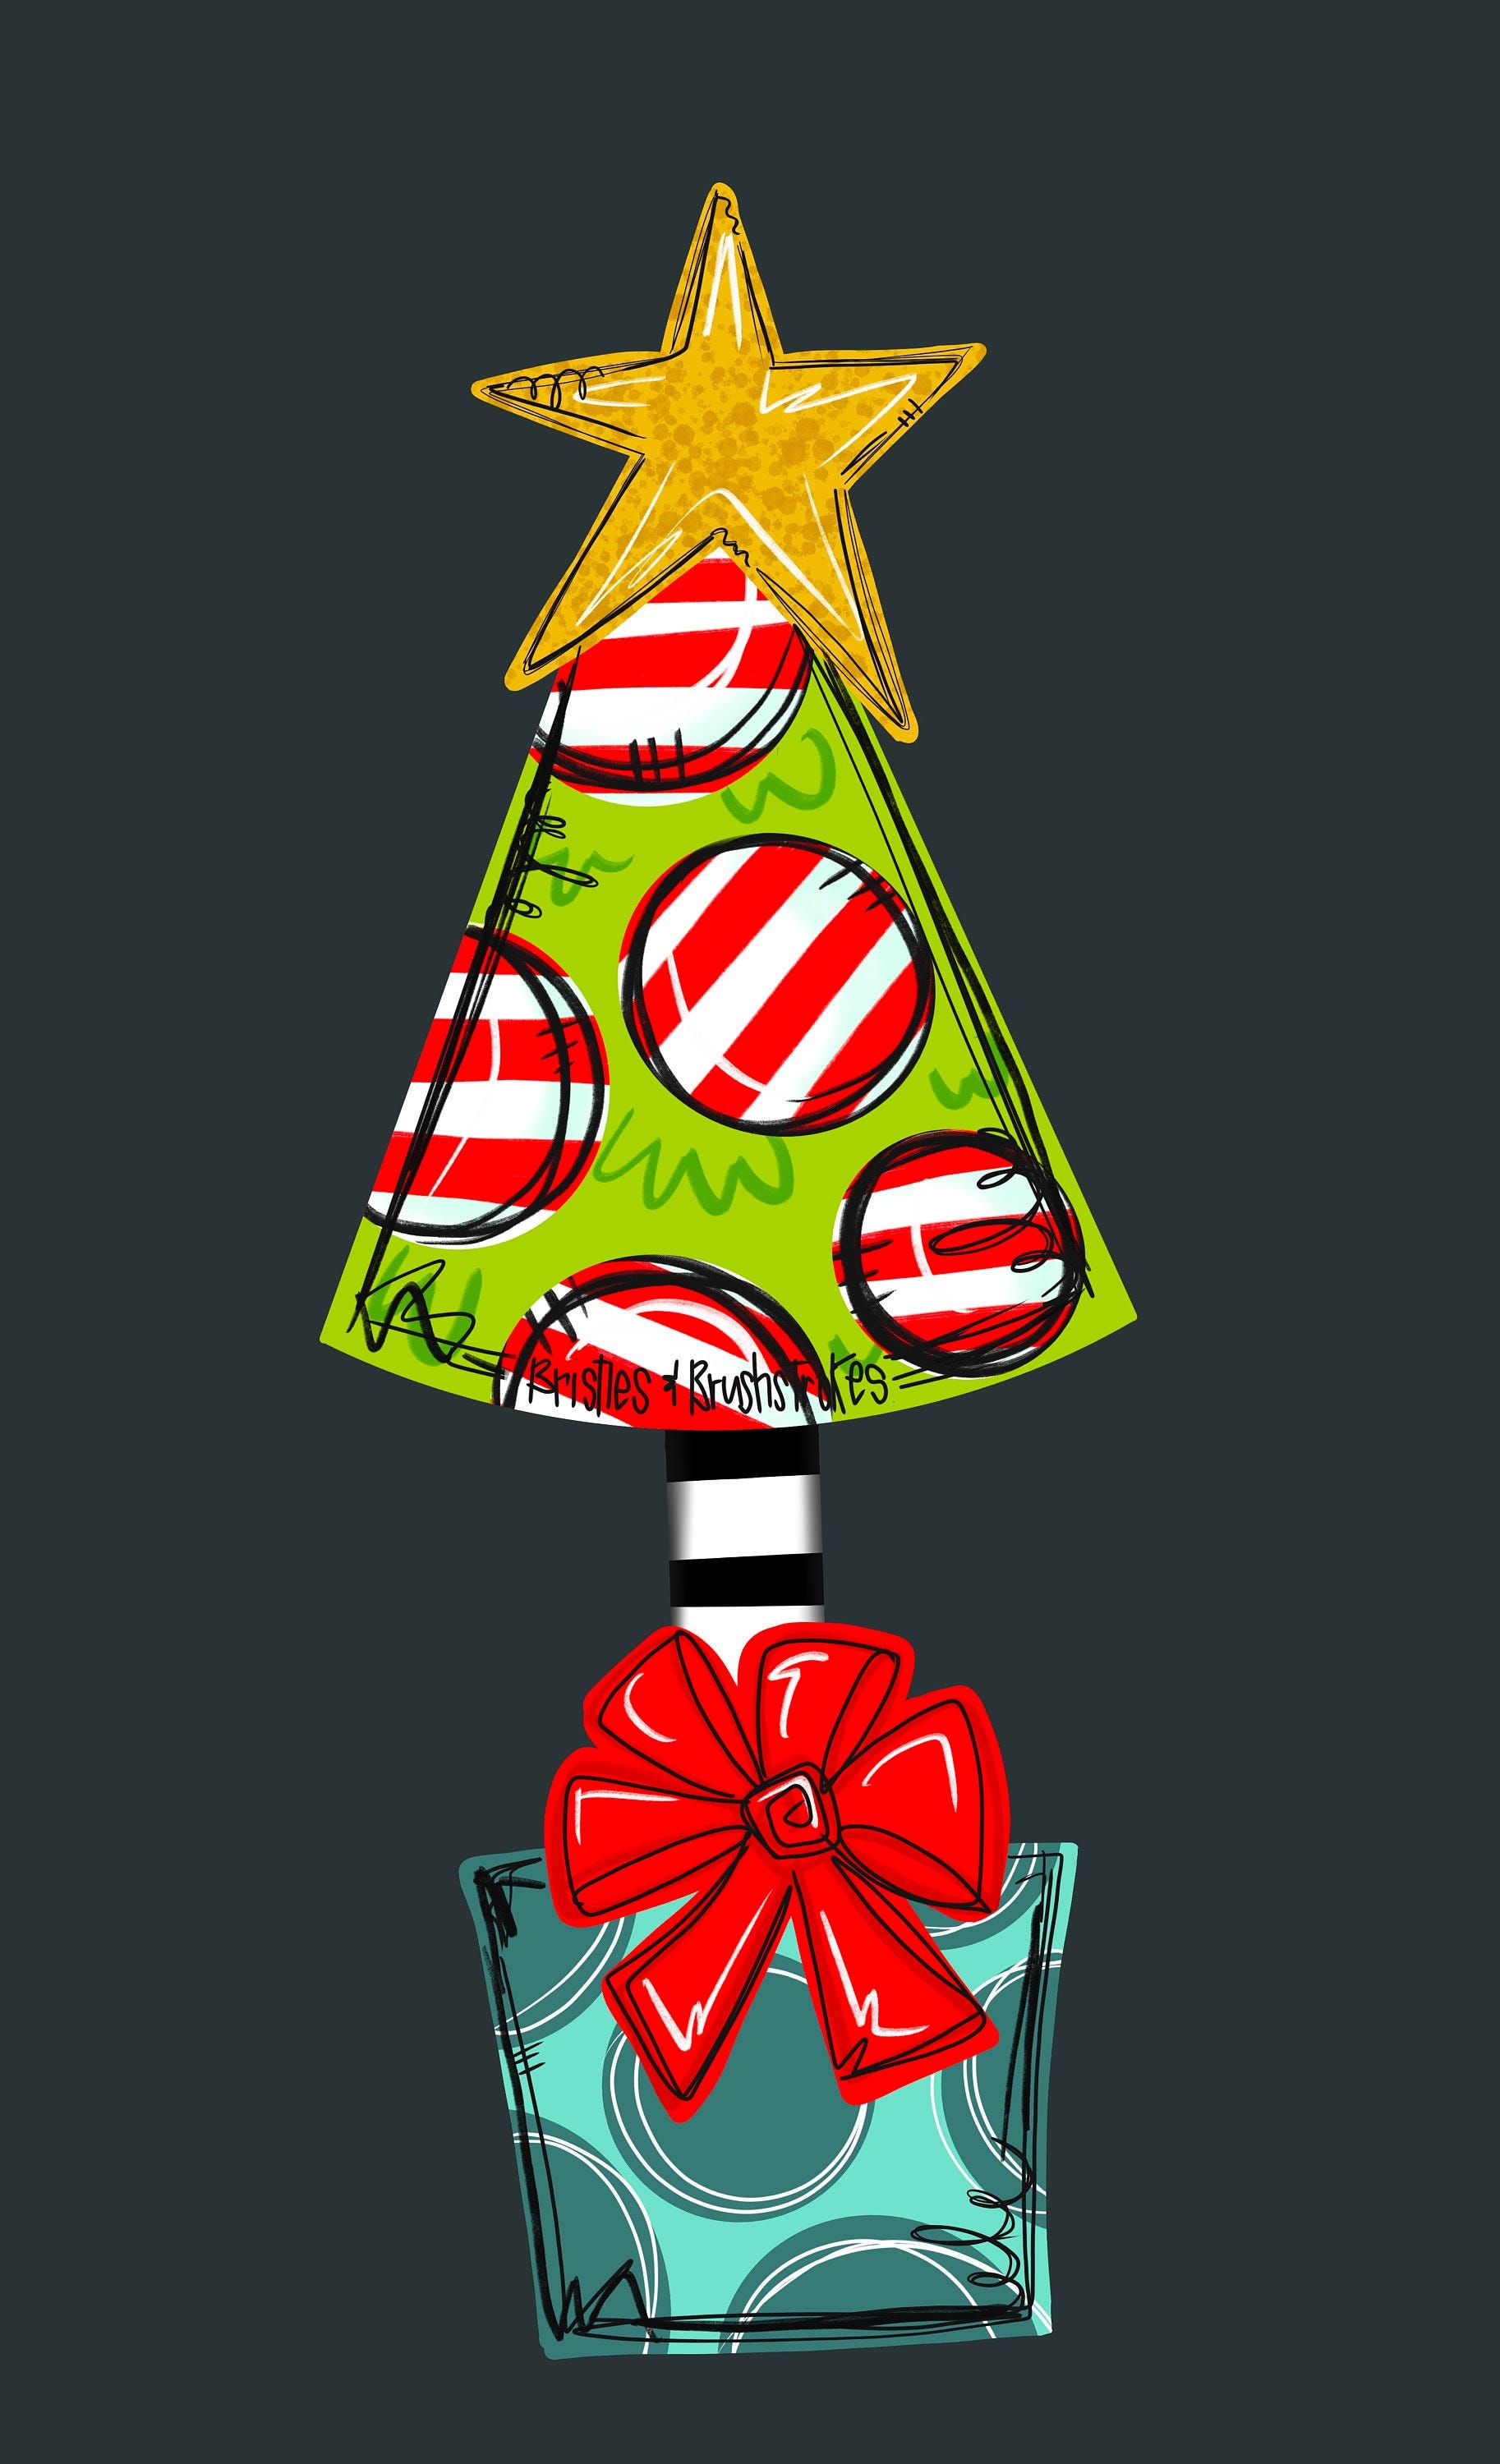 TEMPLATE-Christmas tree door hanger | present | striped ornaments | star topper | ribbon trunk